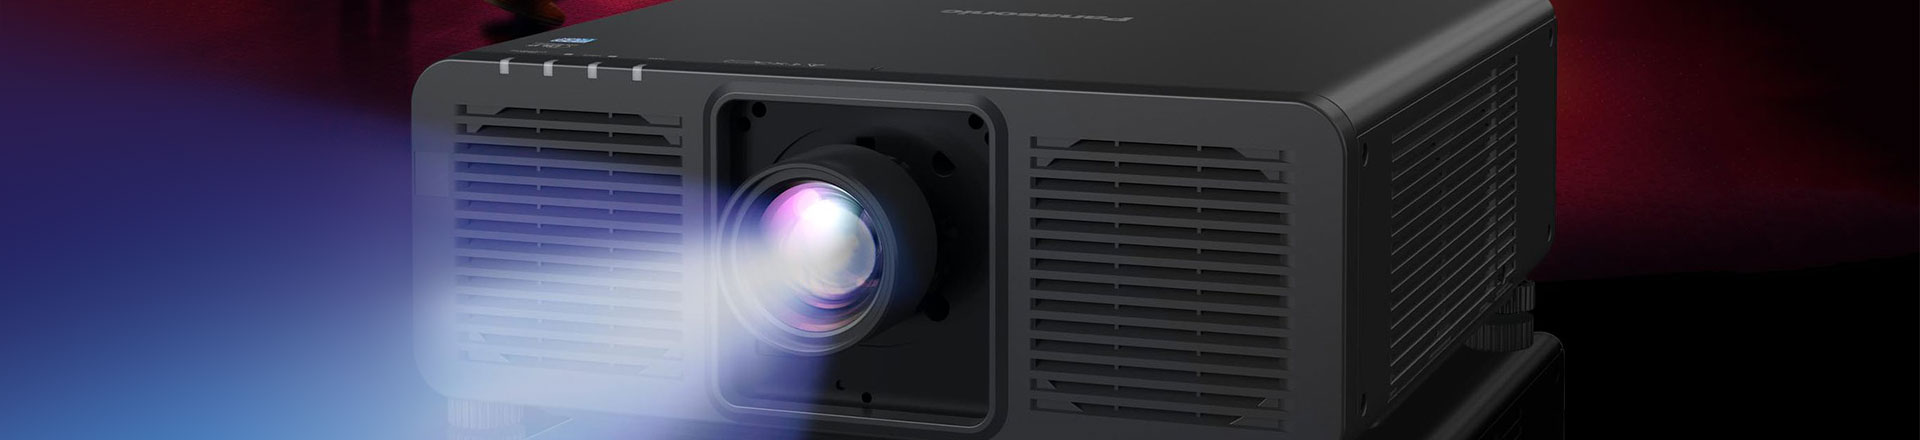 Panasonic prezentuje nowe projektory 4k